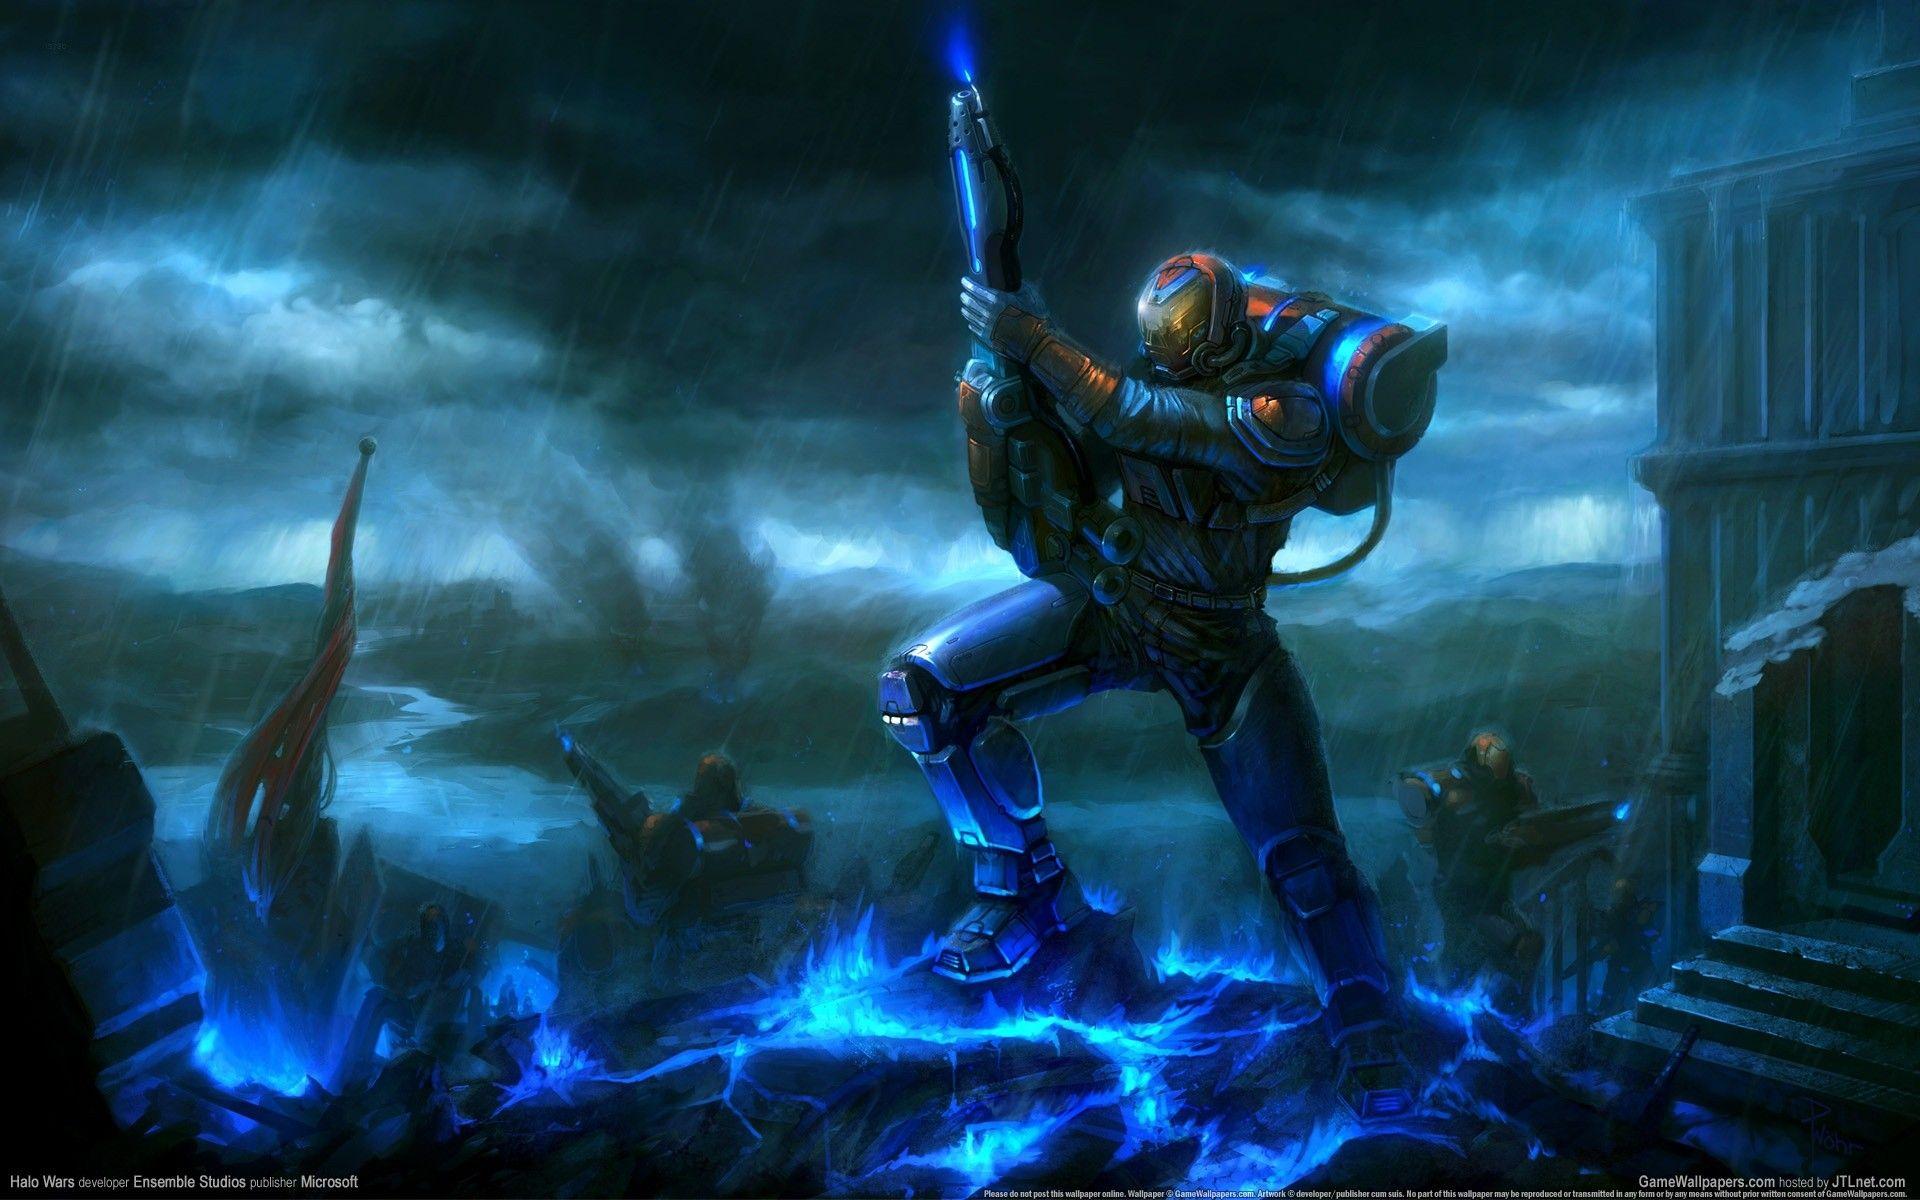 Halo Wars wallpaper. Halo Wars